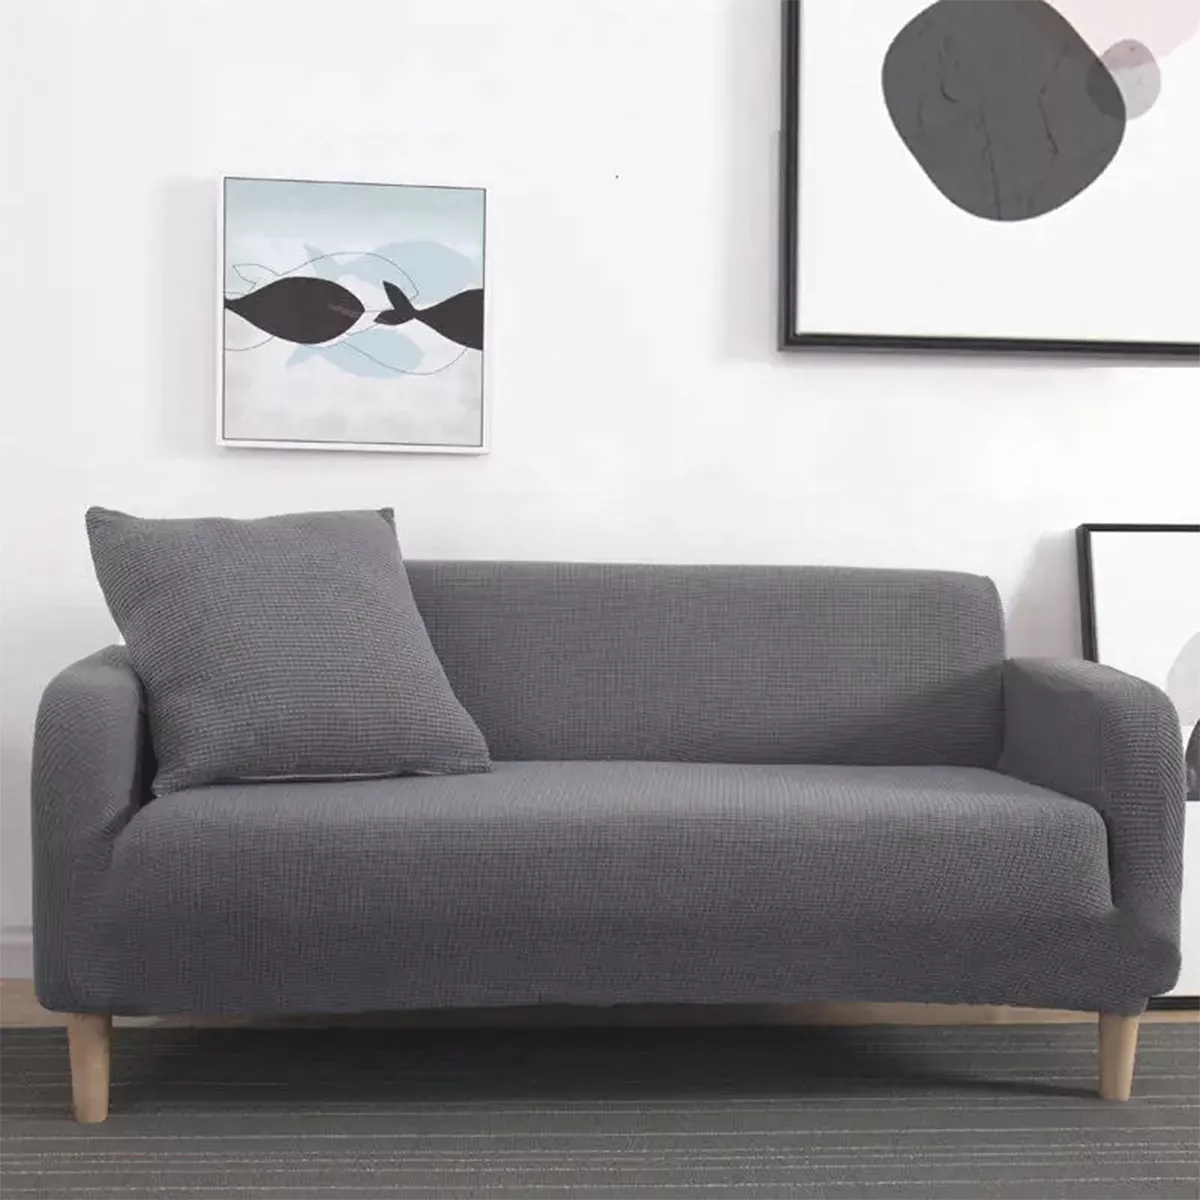 Primera imagen para búsqueda de cubre sofa